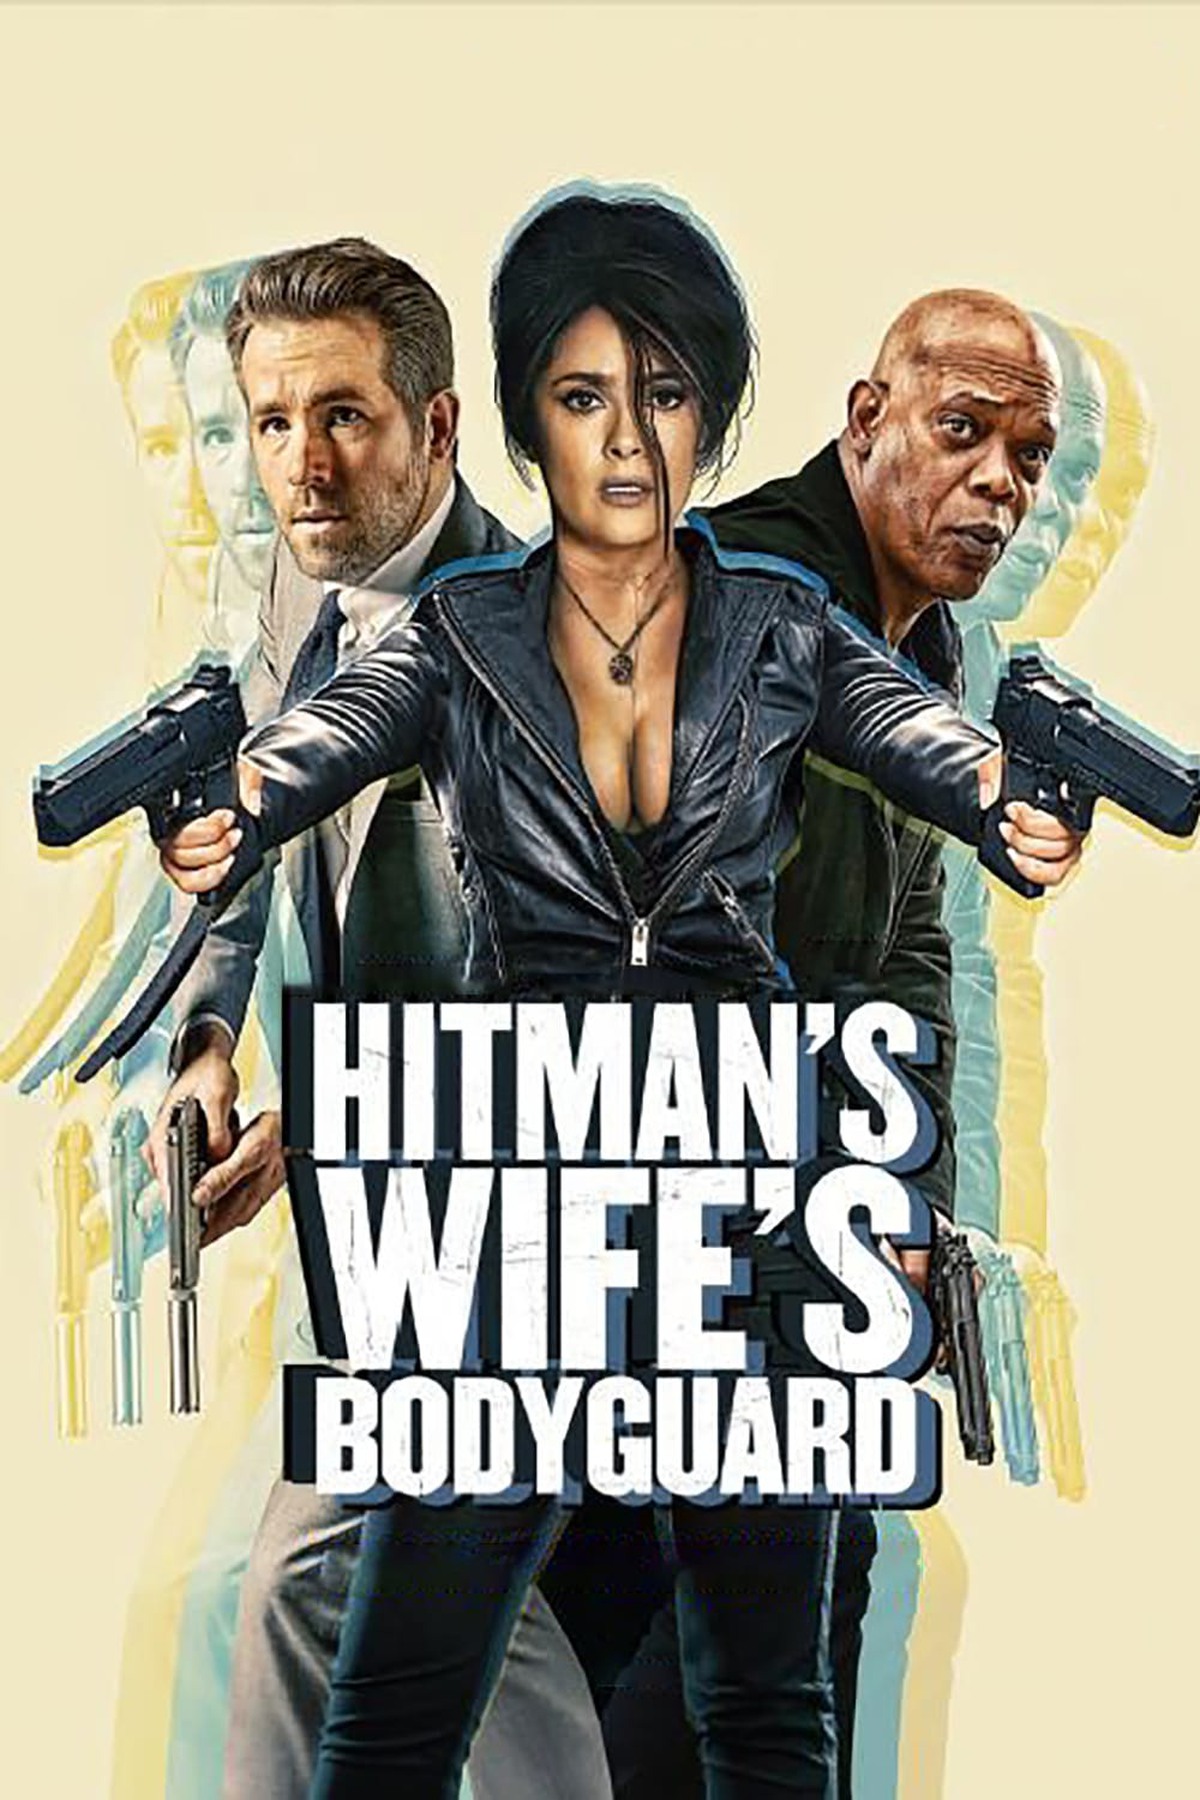 Hitman's Wife's Bodyguard trailer